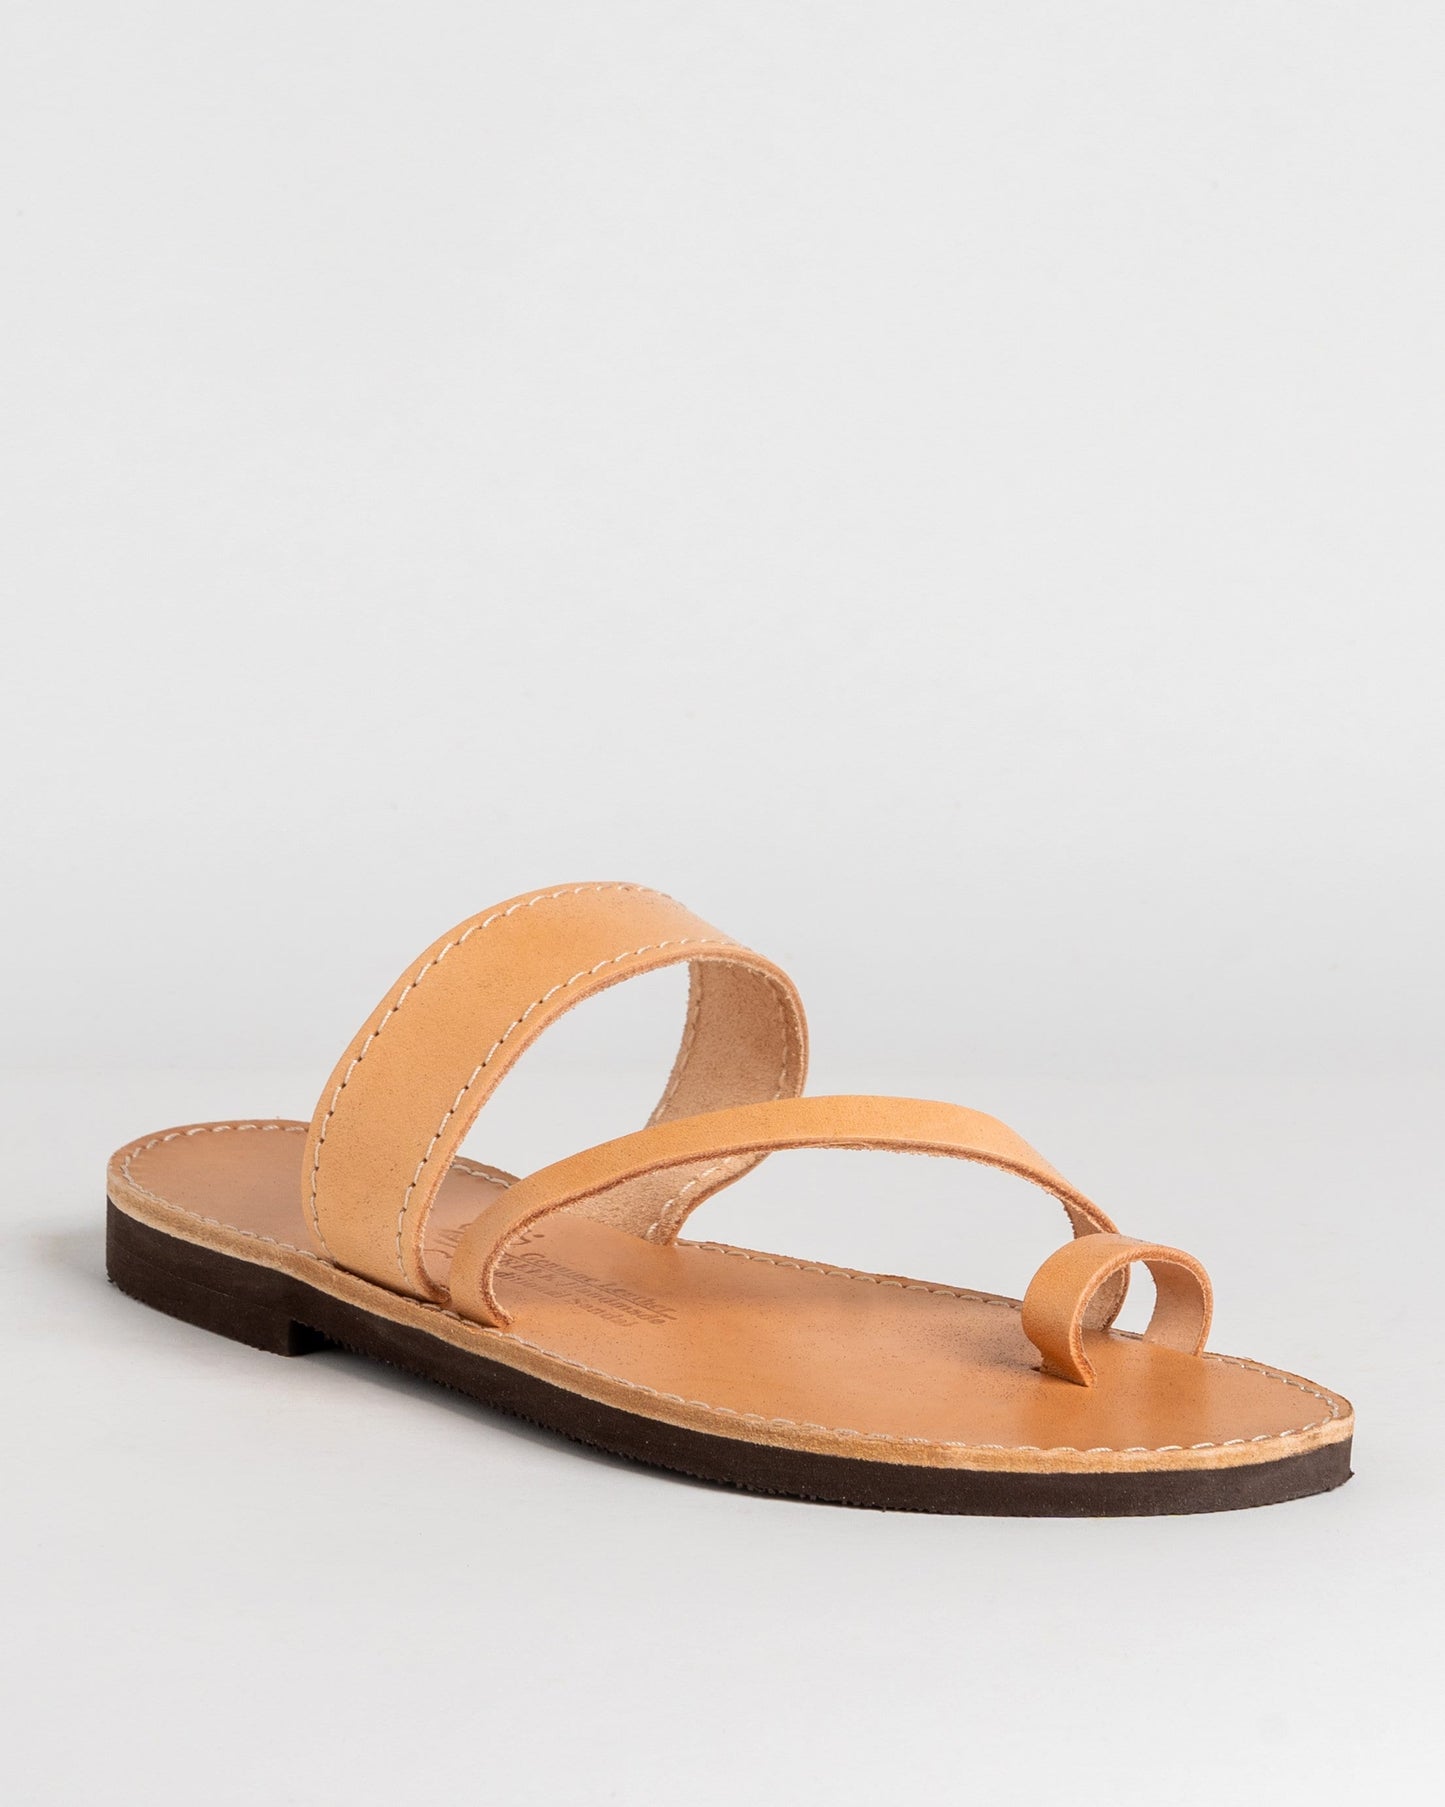 Brown leather sandals, Greek mens leather sandals, Toe ring summer leather sandals, sandalen damen, Summer shoes men